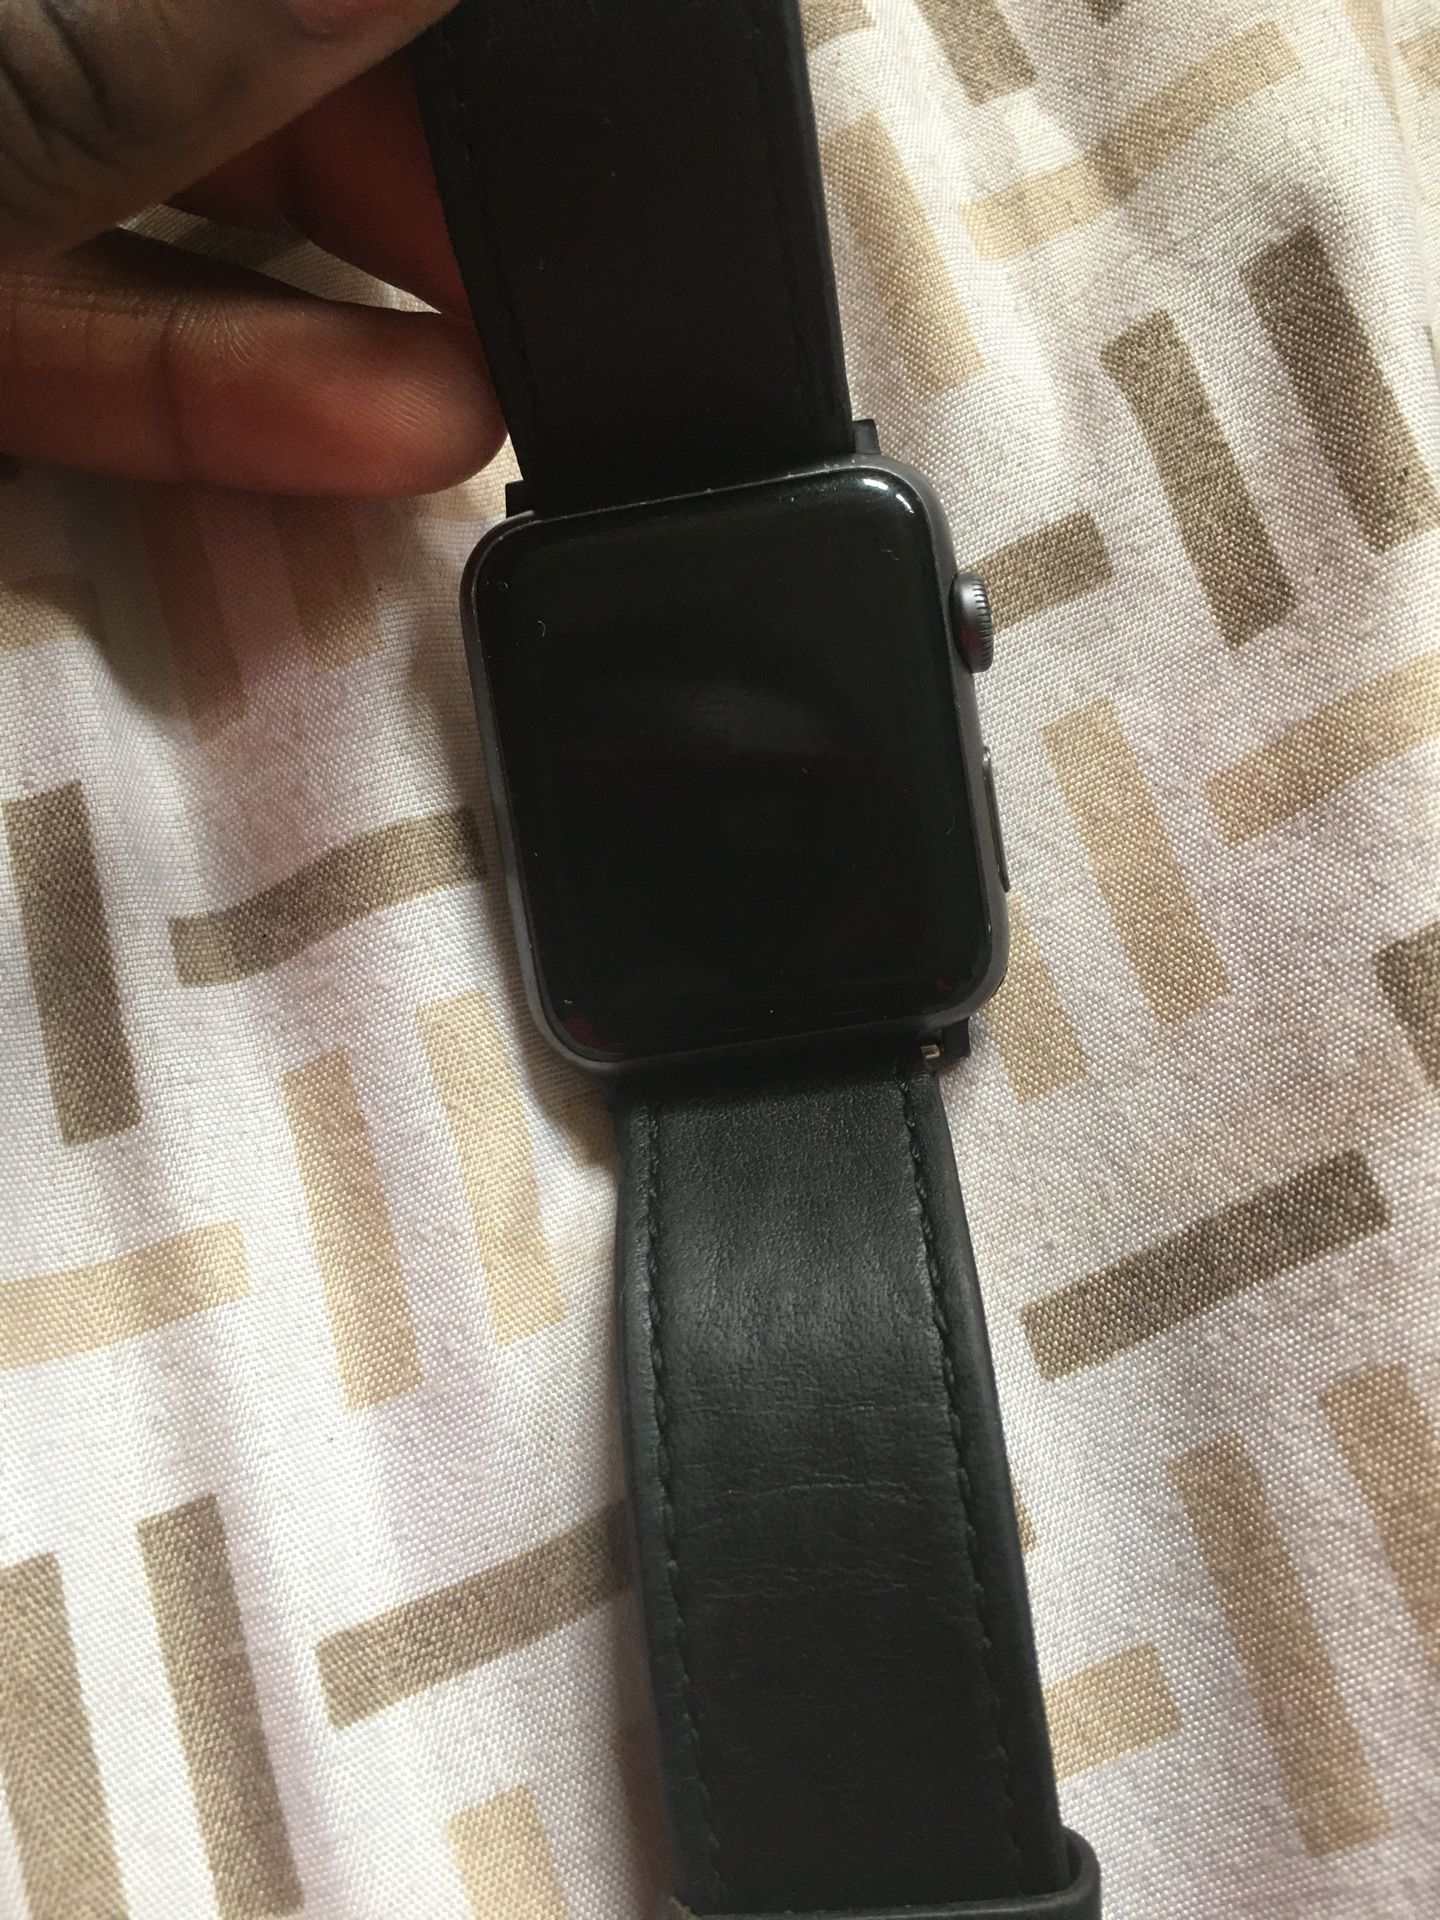 Apple Watch trade